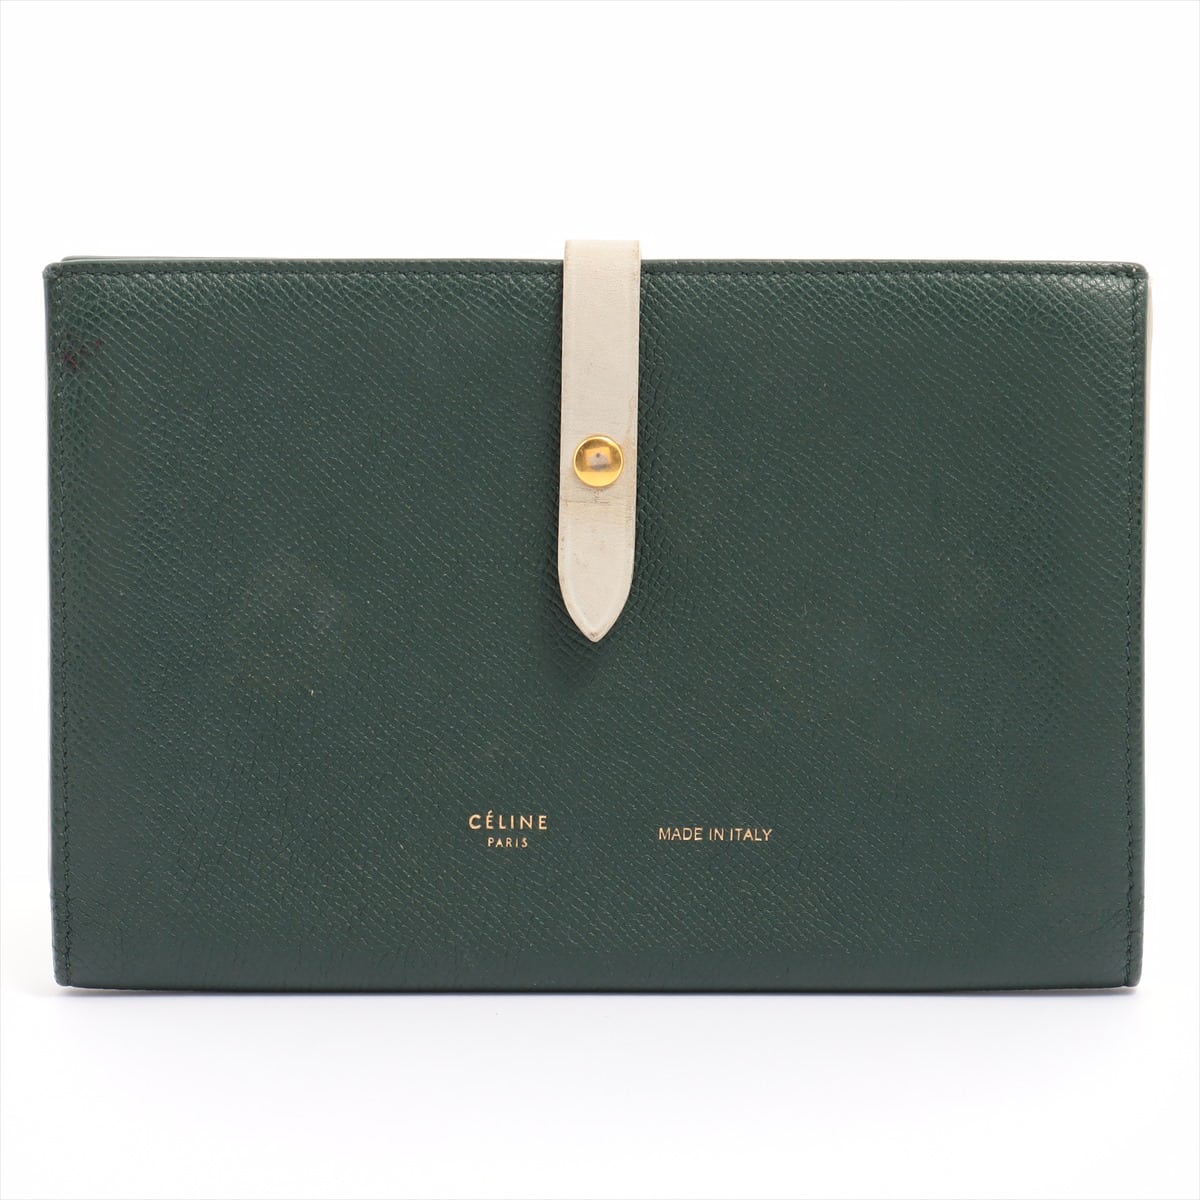 CELINE Strap Large Multifunction Leather Wallet Green